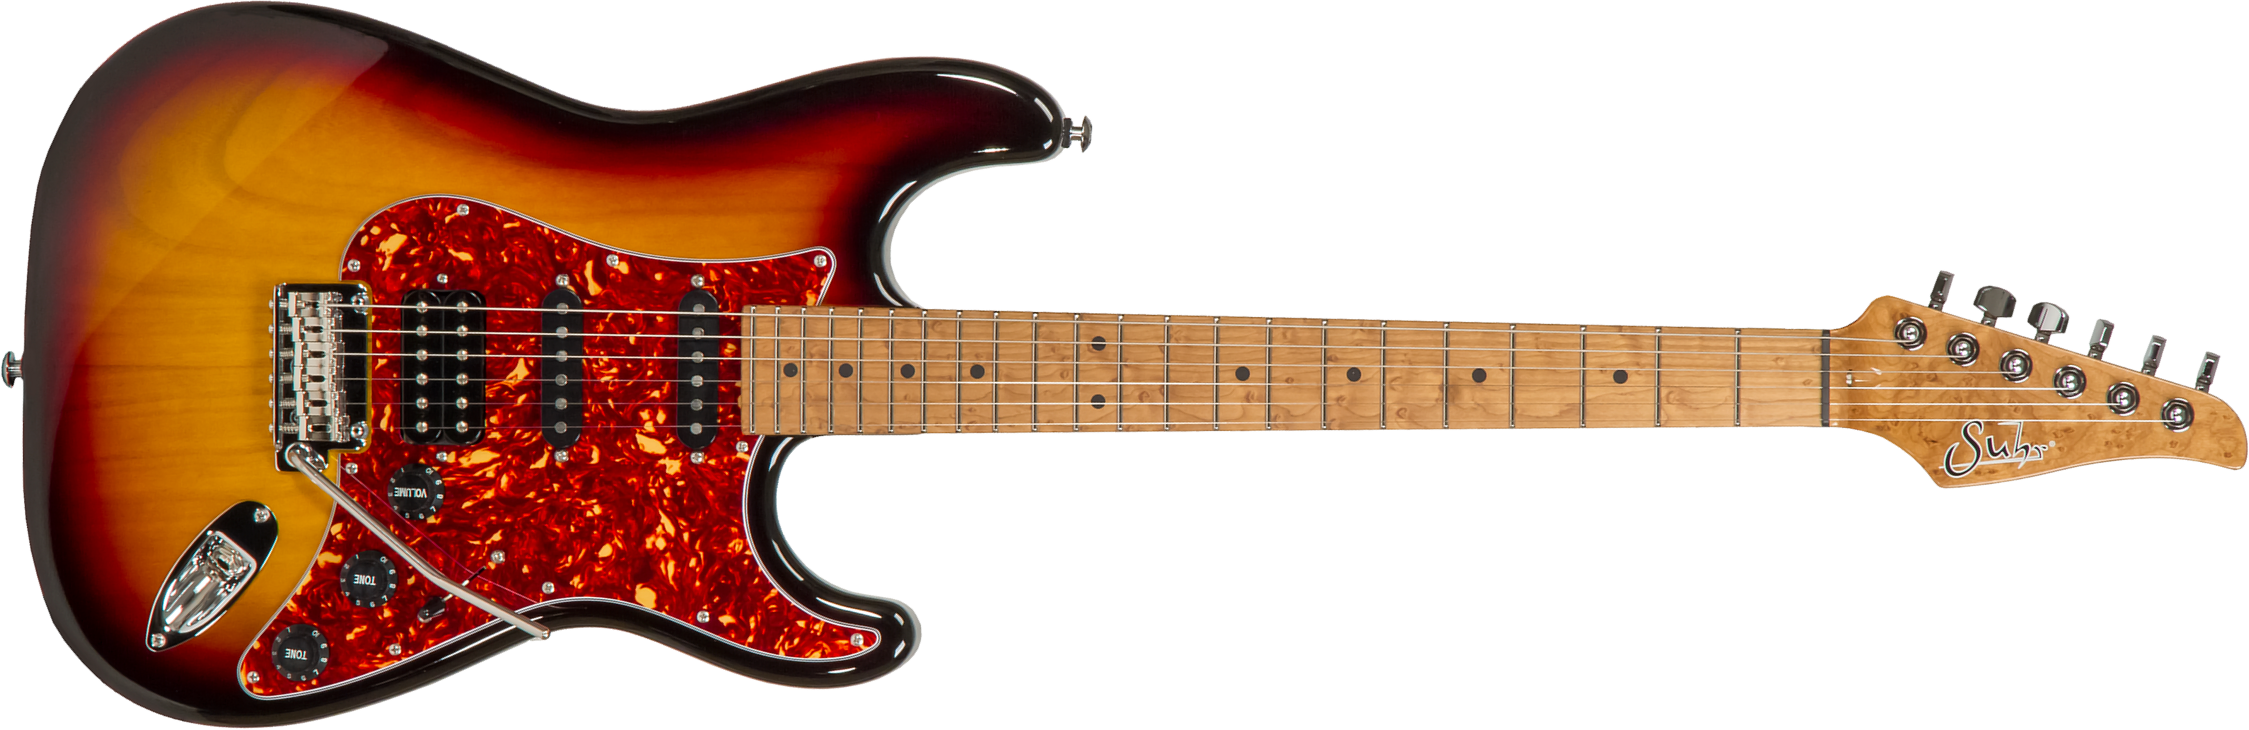 Suhr Classic S Paulownia 01-ltd-0021 Hss Trem Rw #70279 - 3-tone Burst - Guitarra eléctrica con forma de str. - Main picture